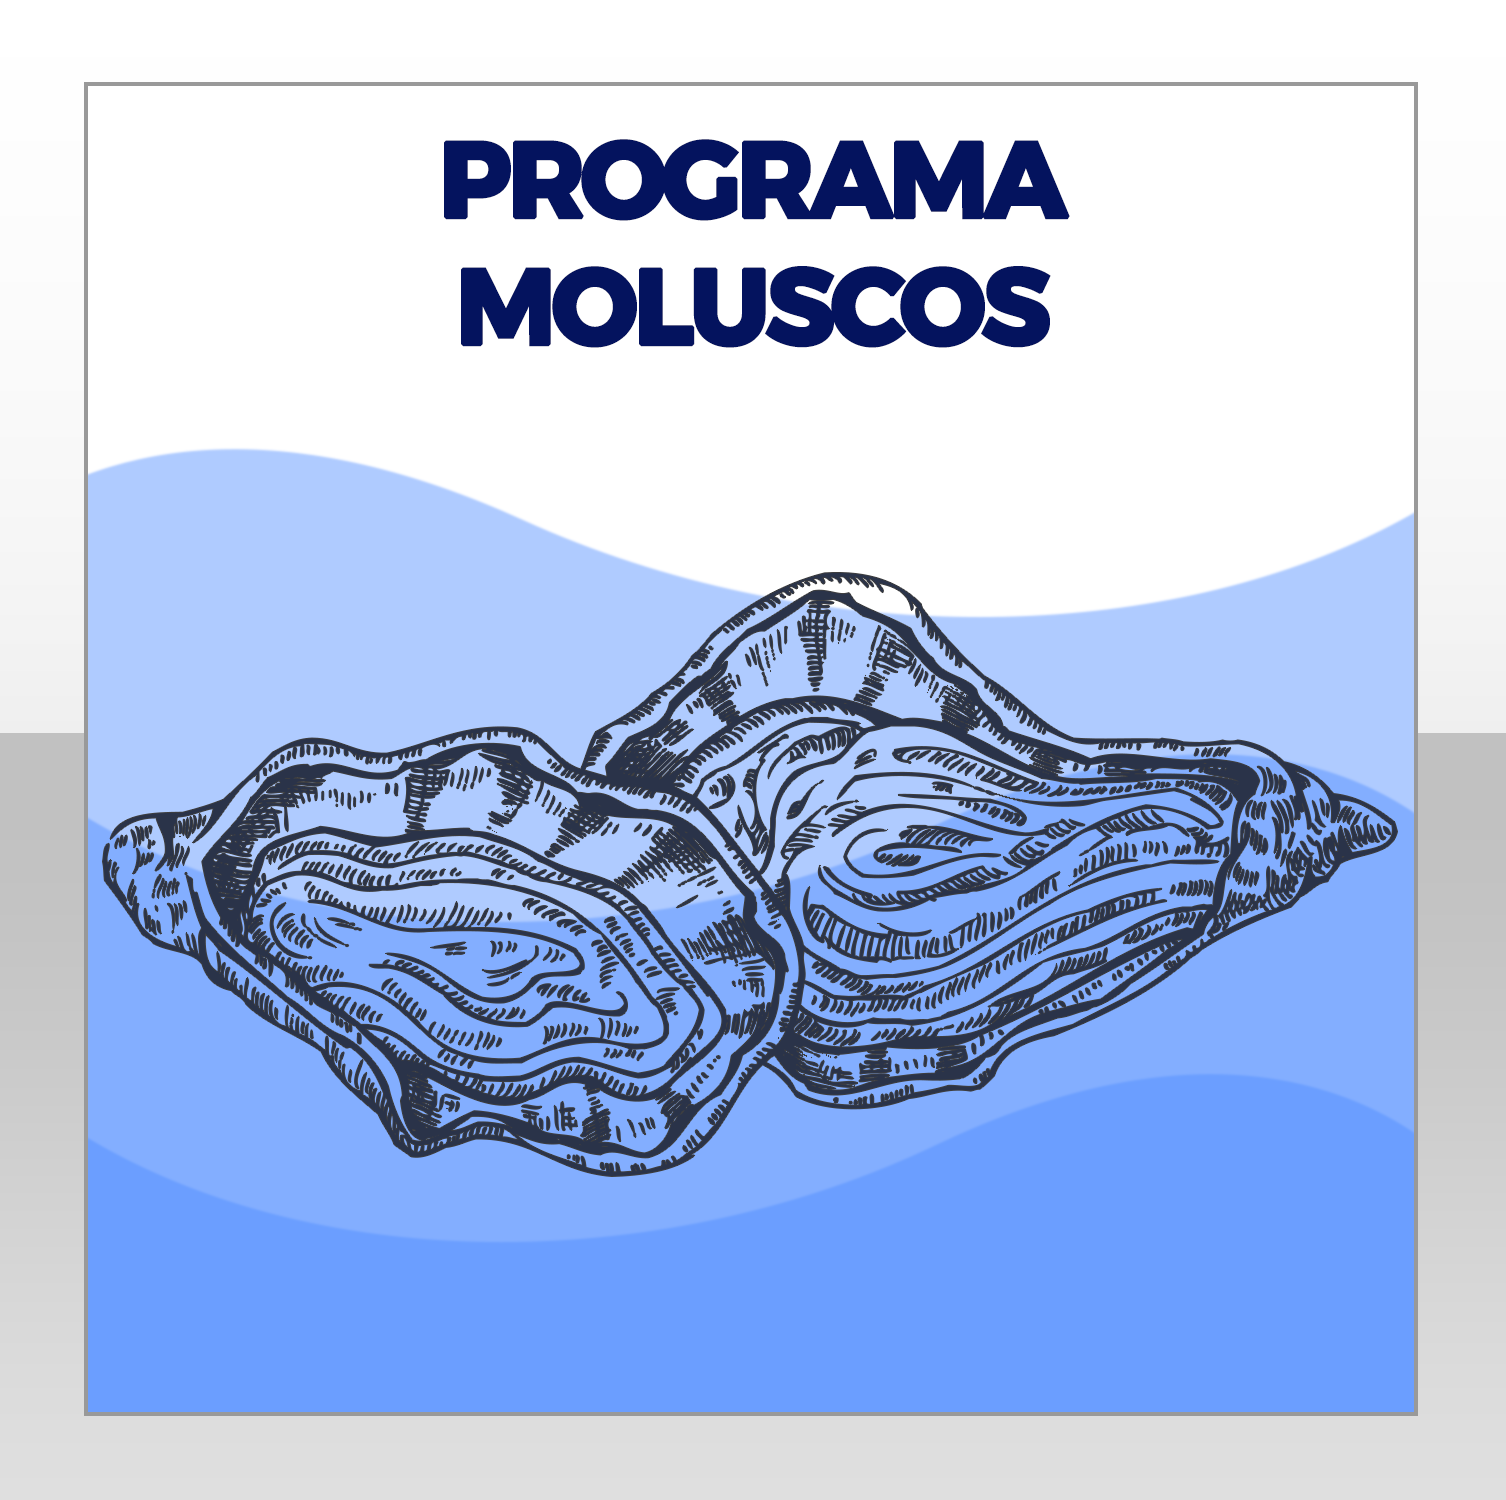 PROGRAMA DE MOLUSCOS